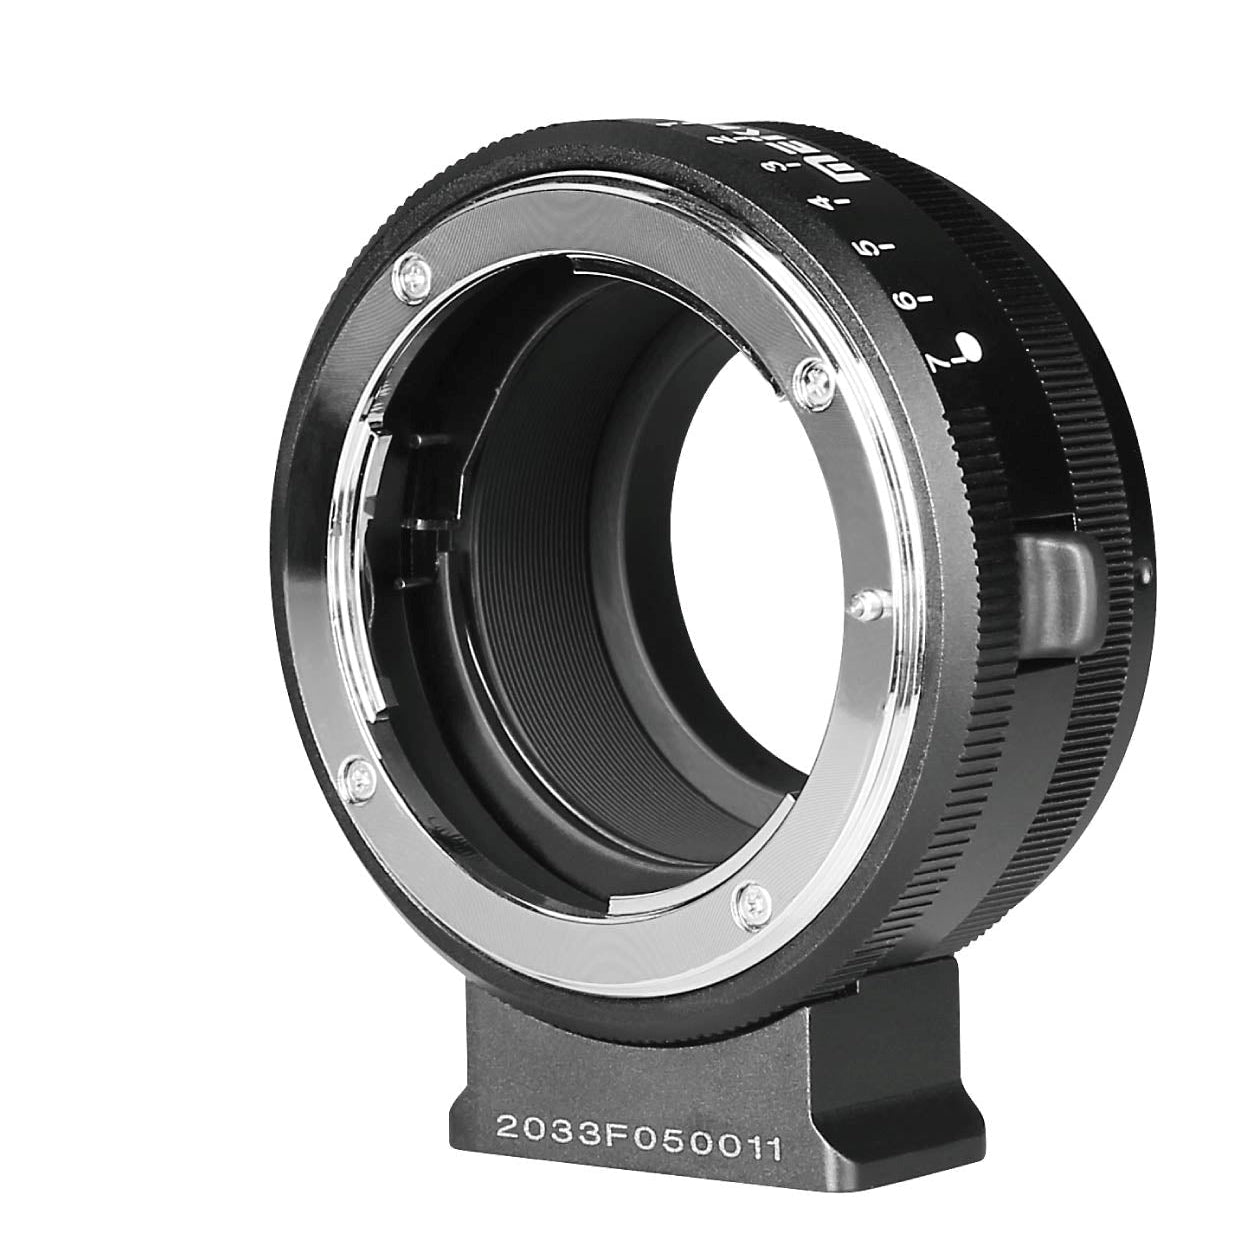 Meike MK-NF-P Adapter for Nikon F-mount Lens to M43-Mount Mirroless Camera Panasonic Olympus like E-PL5 E-PL6 E-PL7 GM5 GX1 GX7 G3